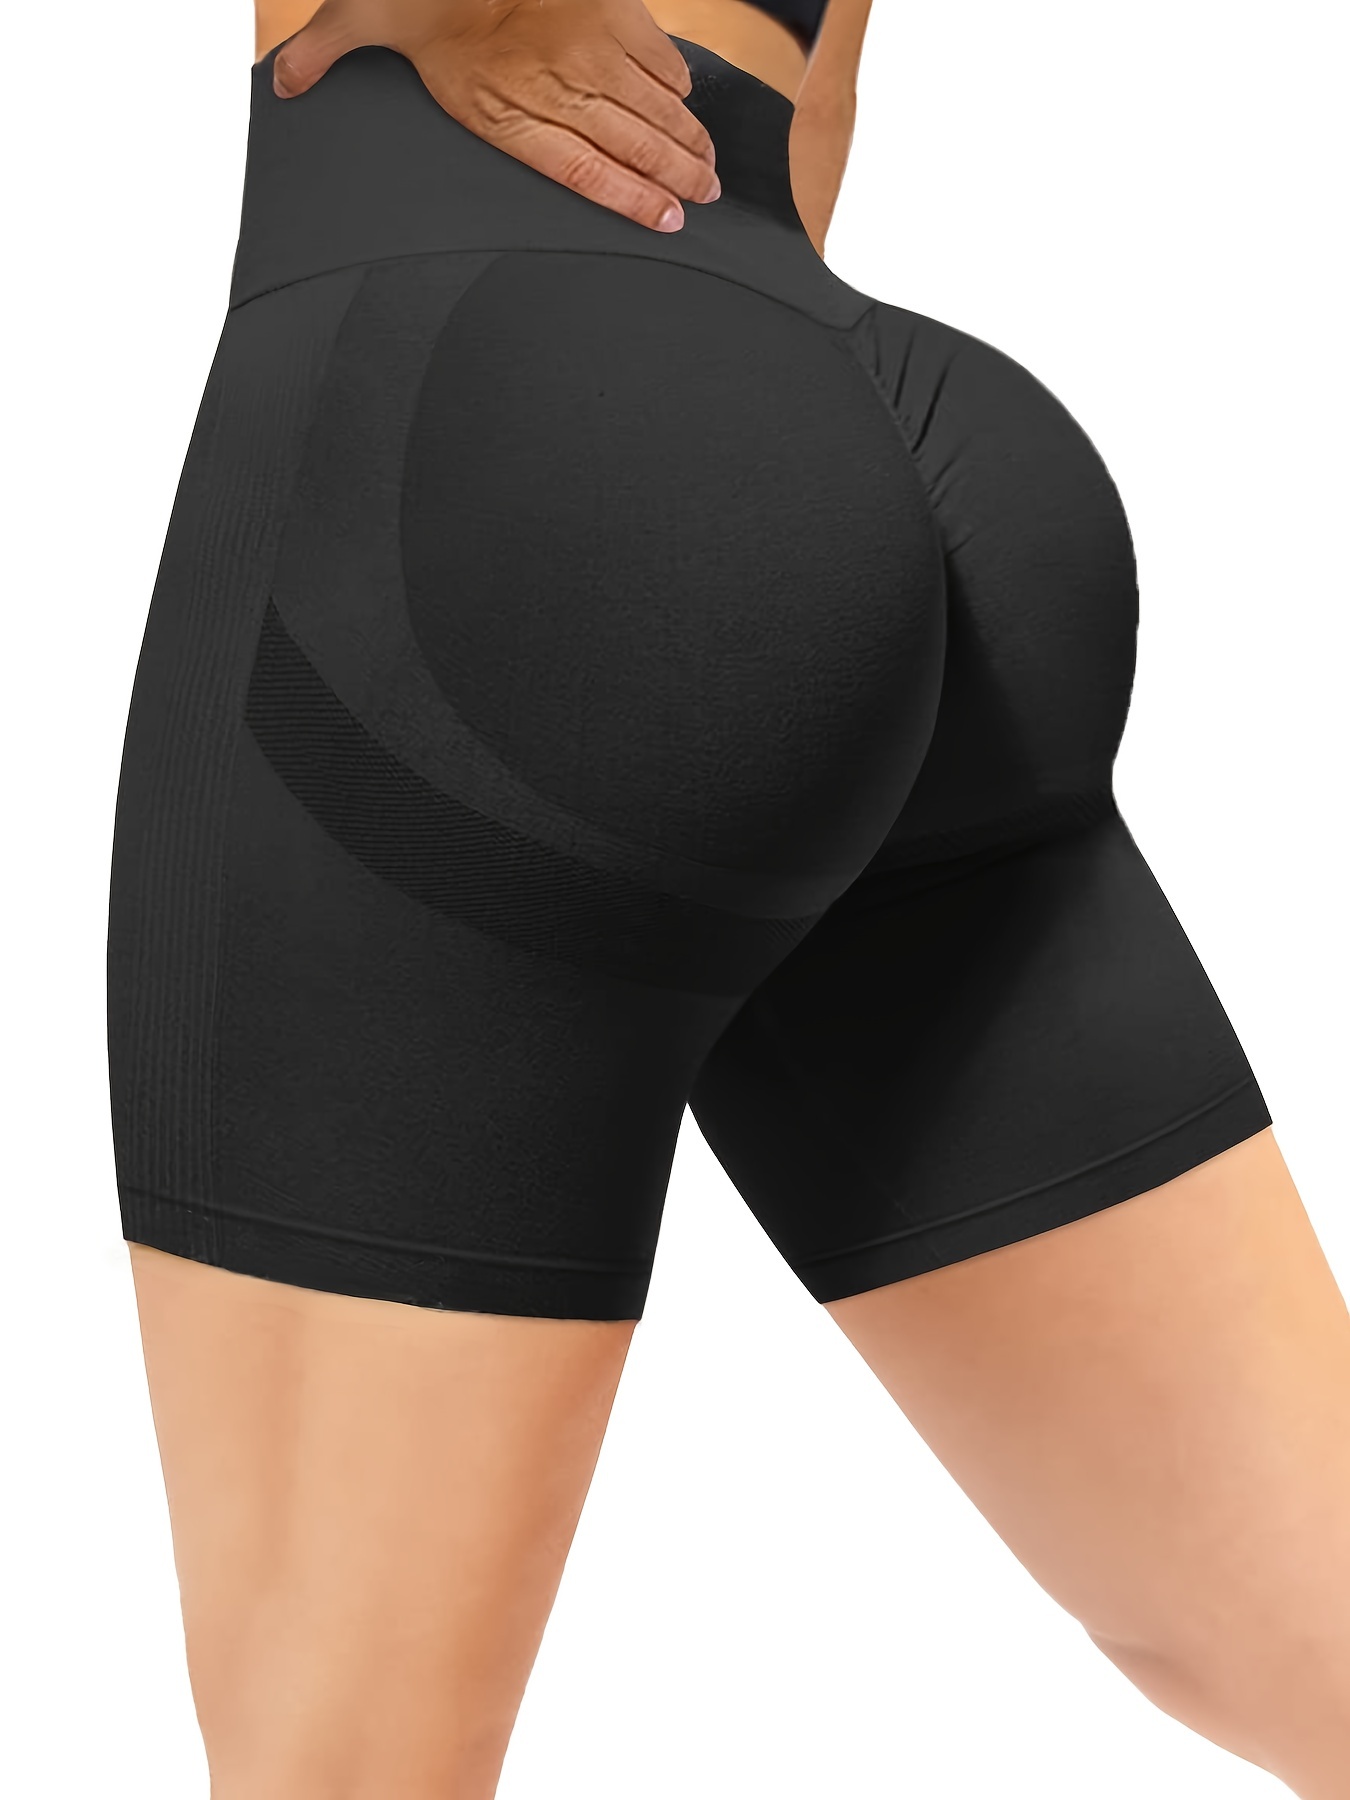 Womens Booty Shorts, Butt Lifting Shorts